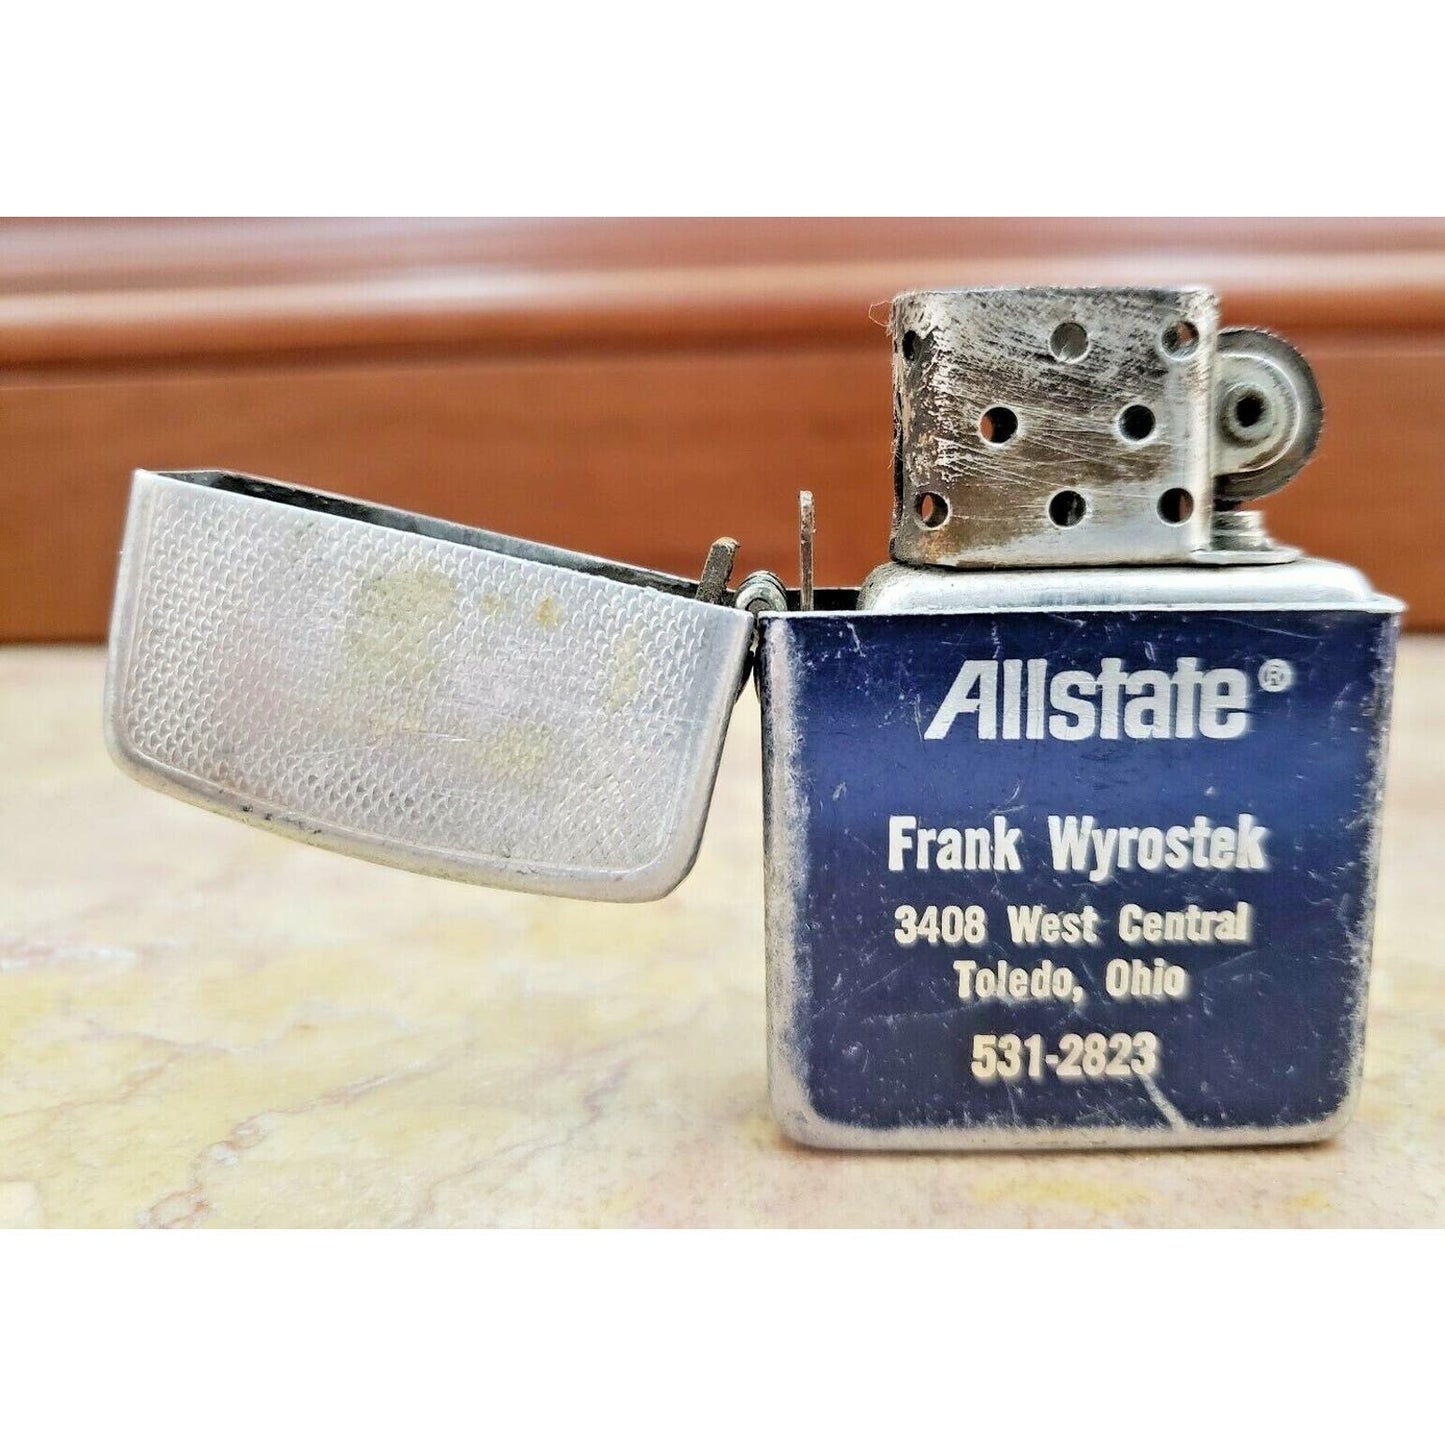 ALLSTATE Vintage Working PARK Lighter Advertising "Allstate " 4099/30